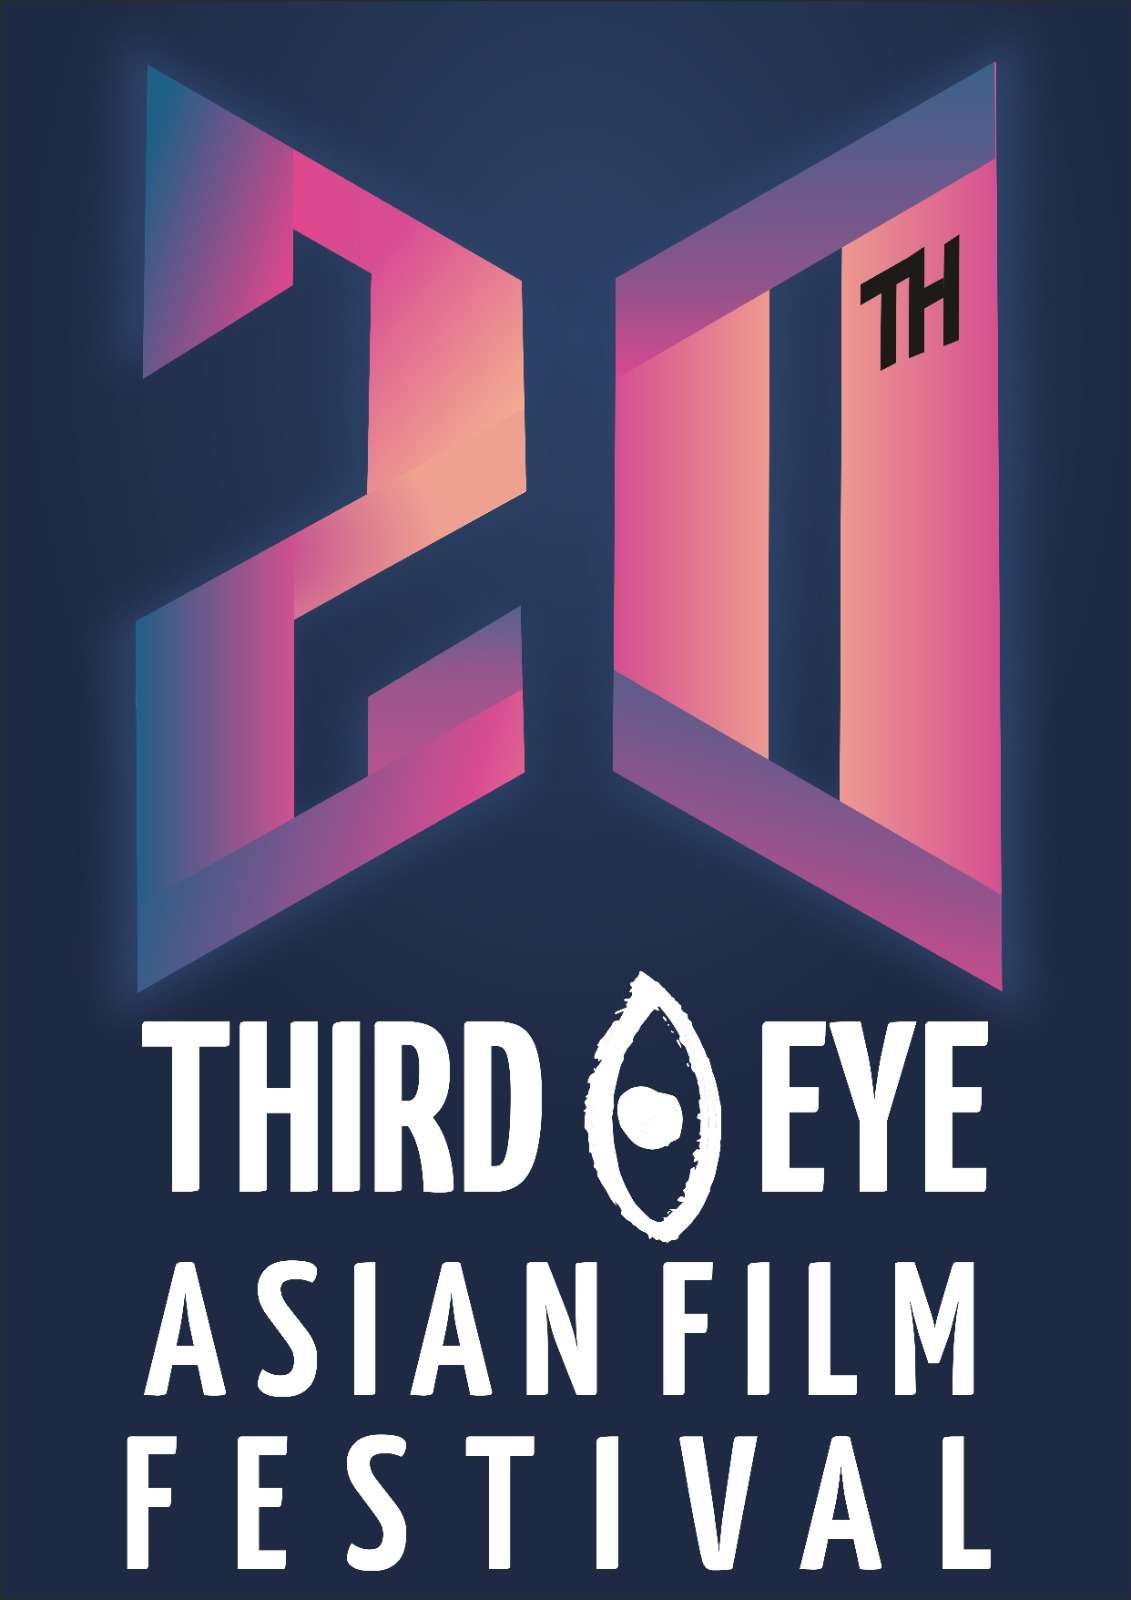 १२ जानेवारीपासून थर्डआयआशियाई चित्रपट महोत्सवास प्रारंभ